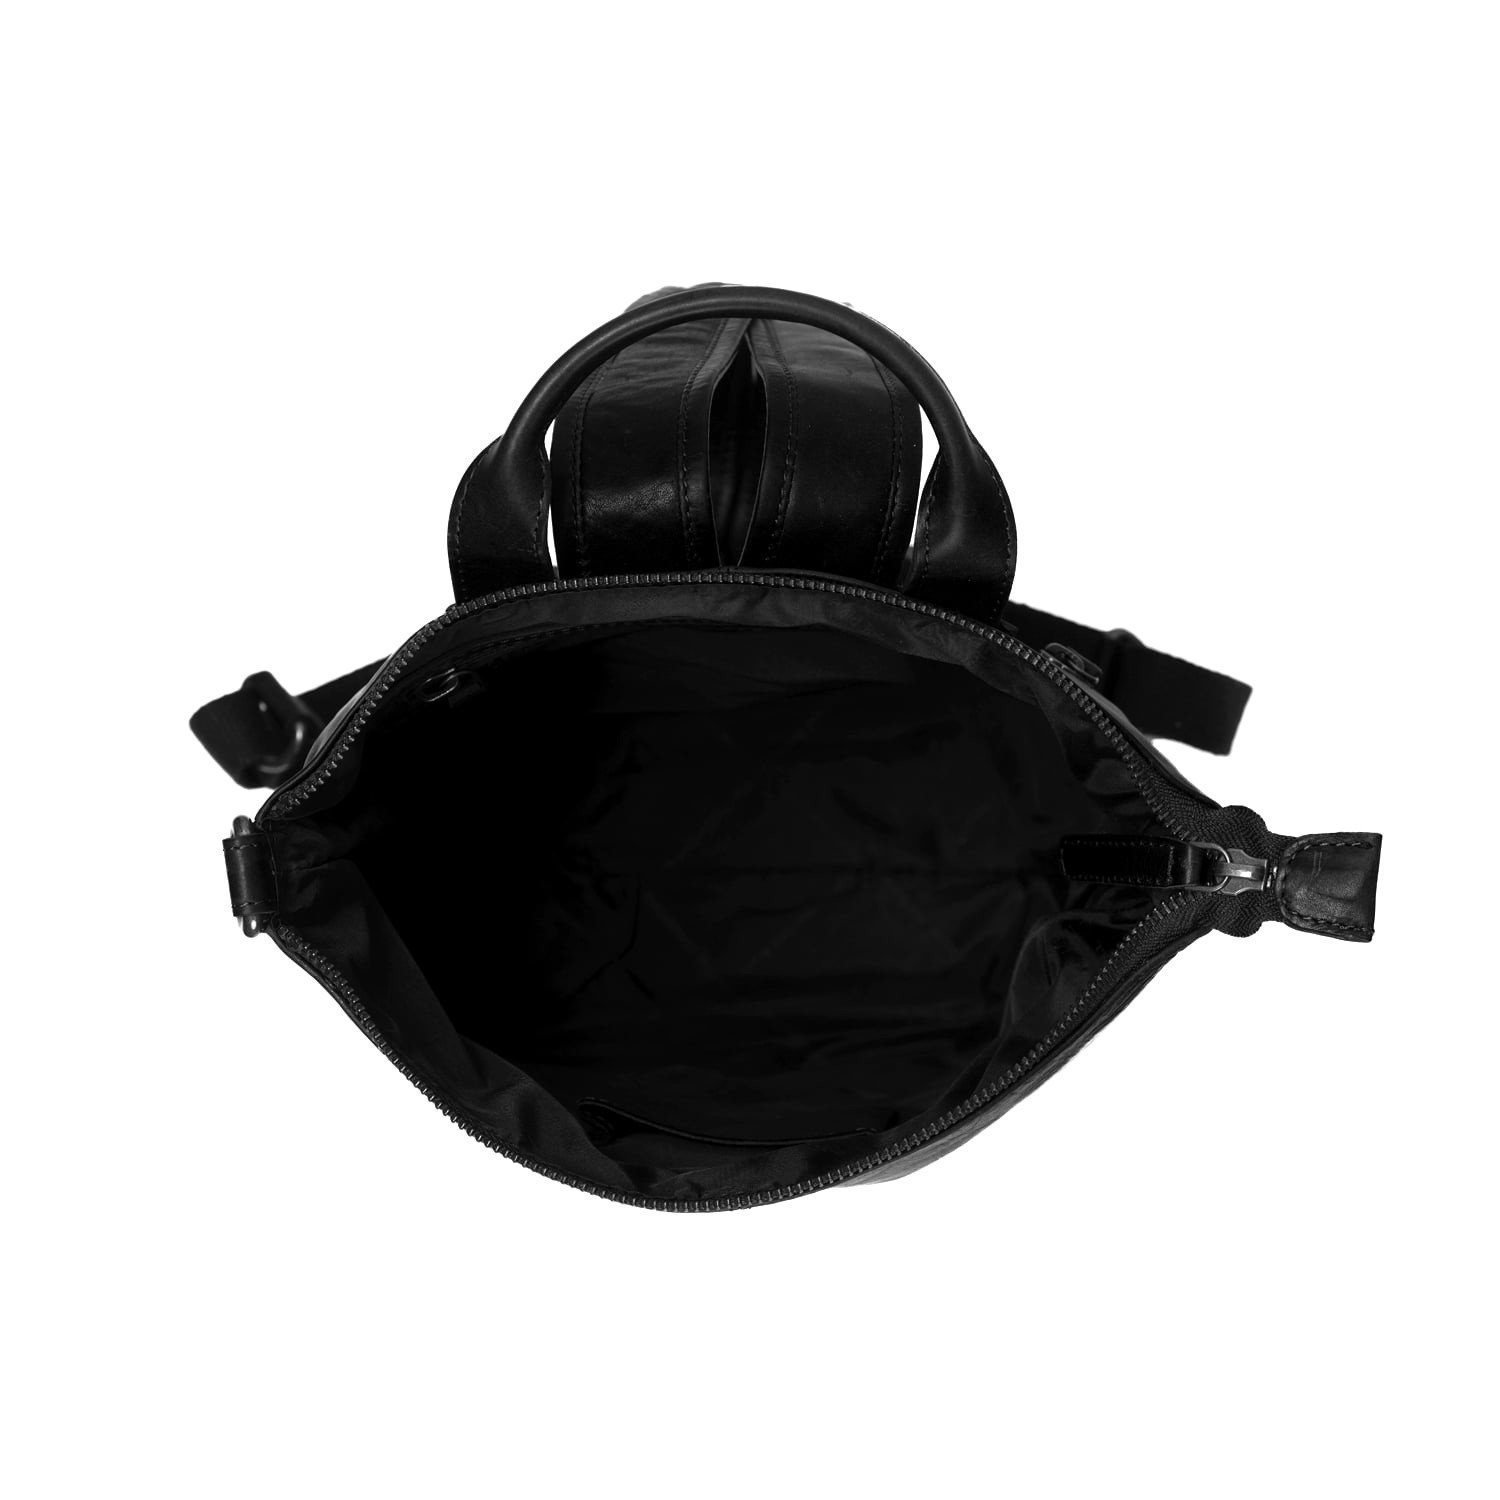 Leather Backpack Black Saar - The Chesterfield Brand